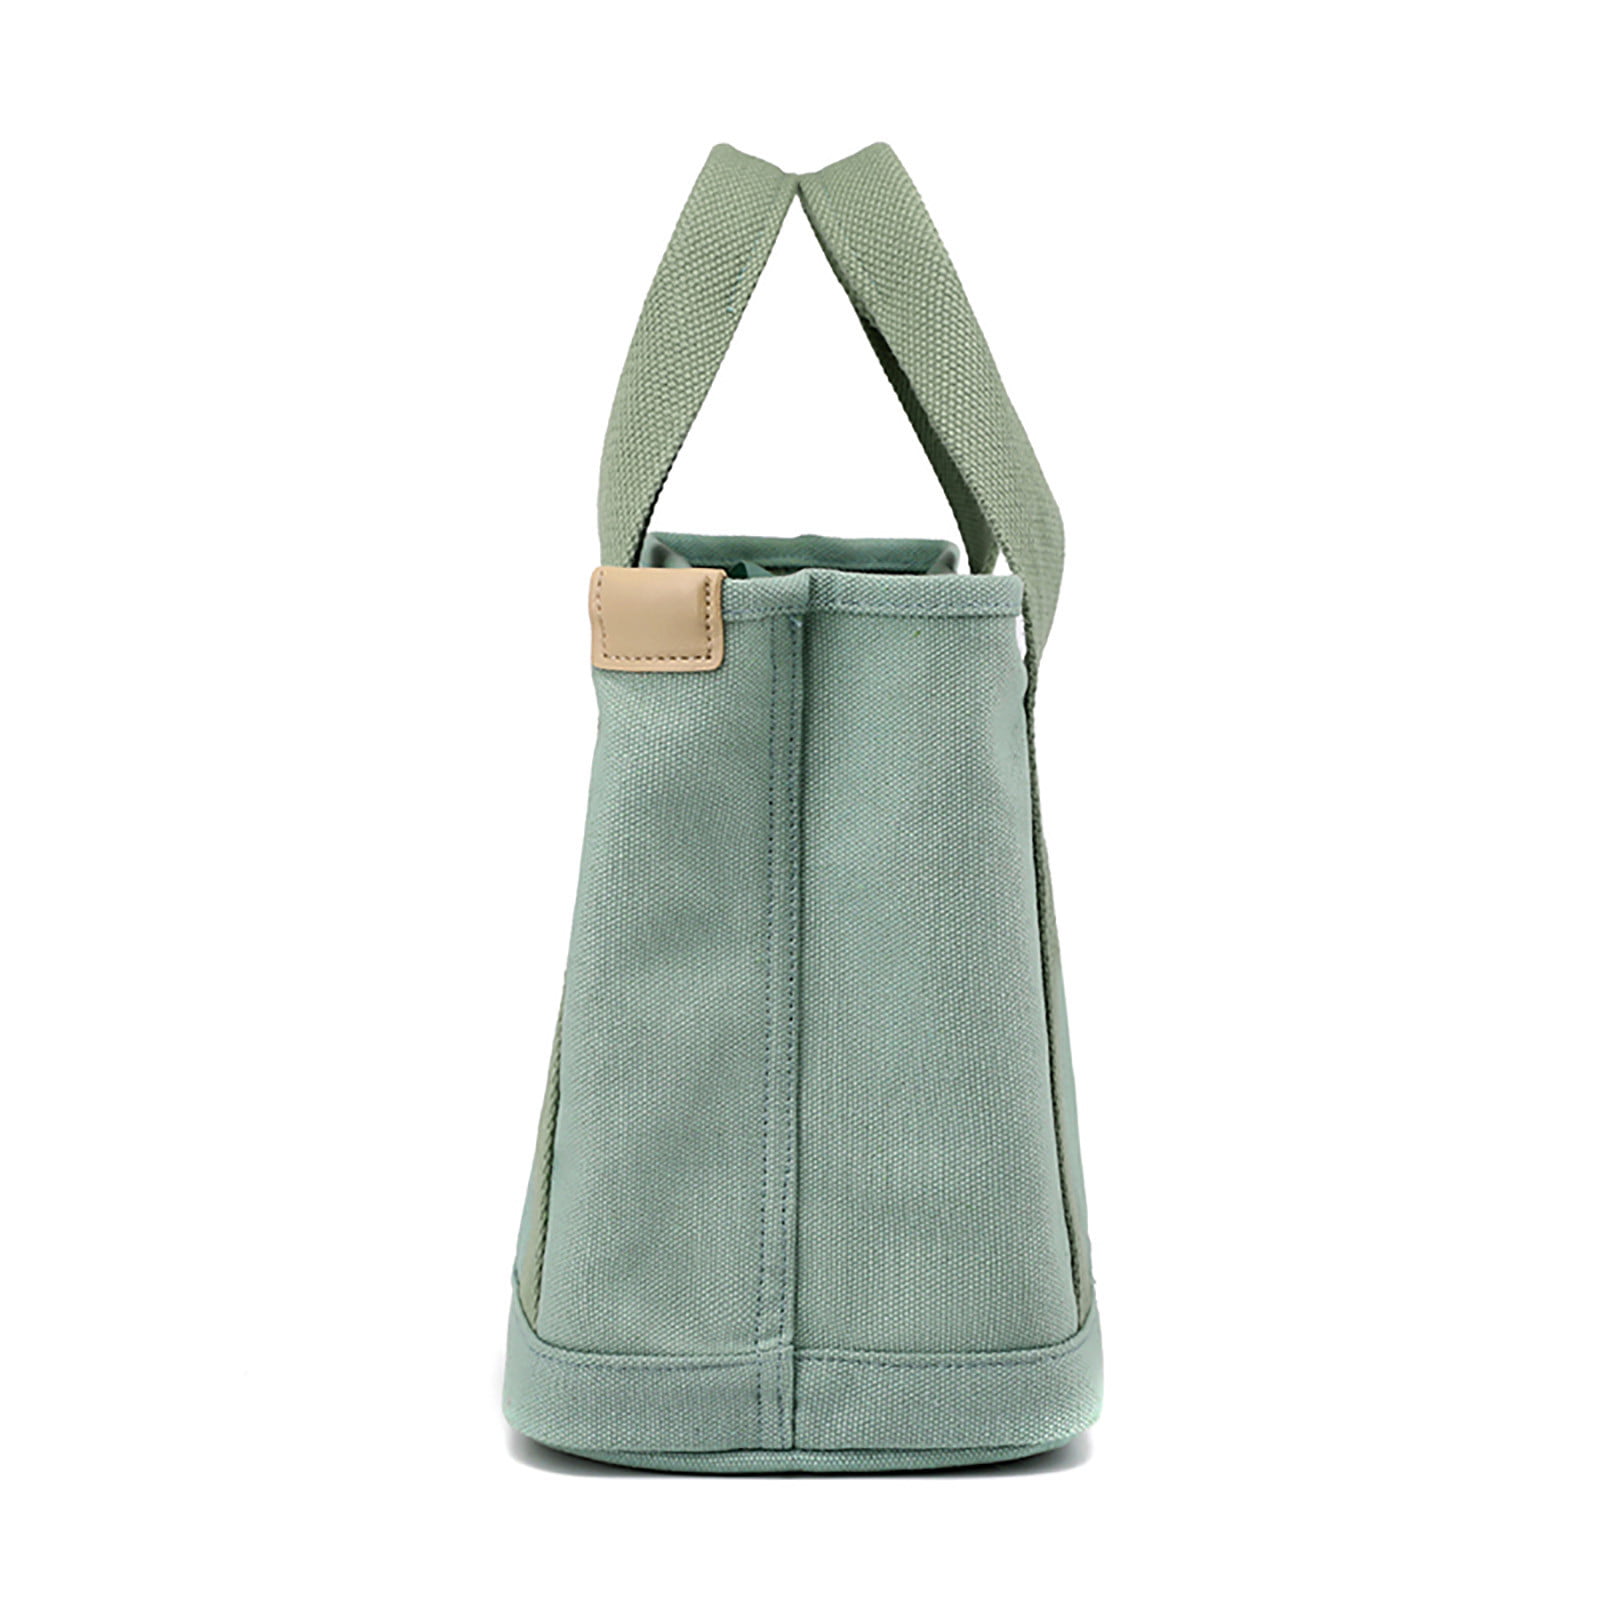 Clearance! SDJMa Canvas Tote Bag for Women Crossbody Shoulder Handbags  Multi-Pocket Handbag Teen Girl Cute Casual School Bag